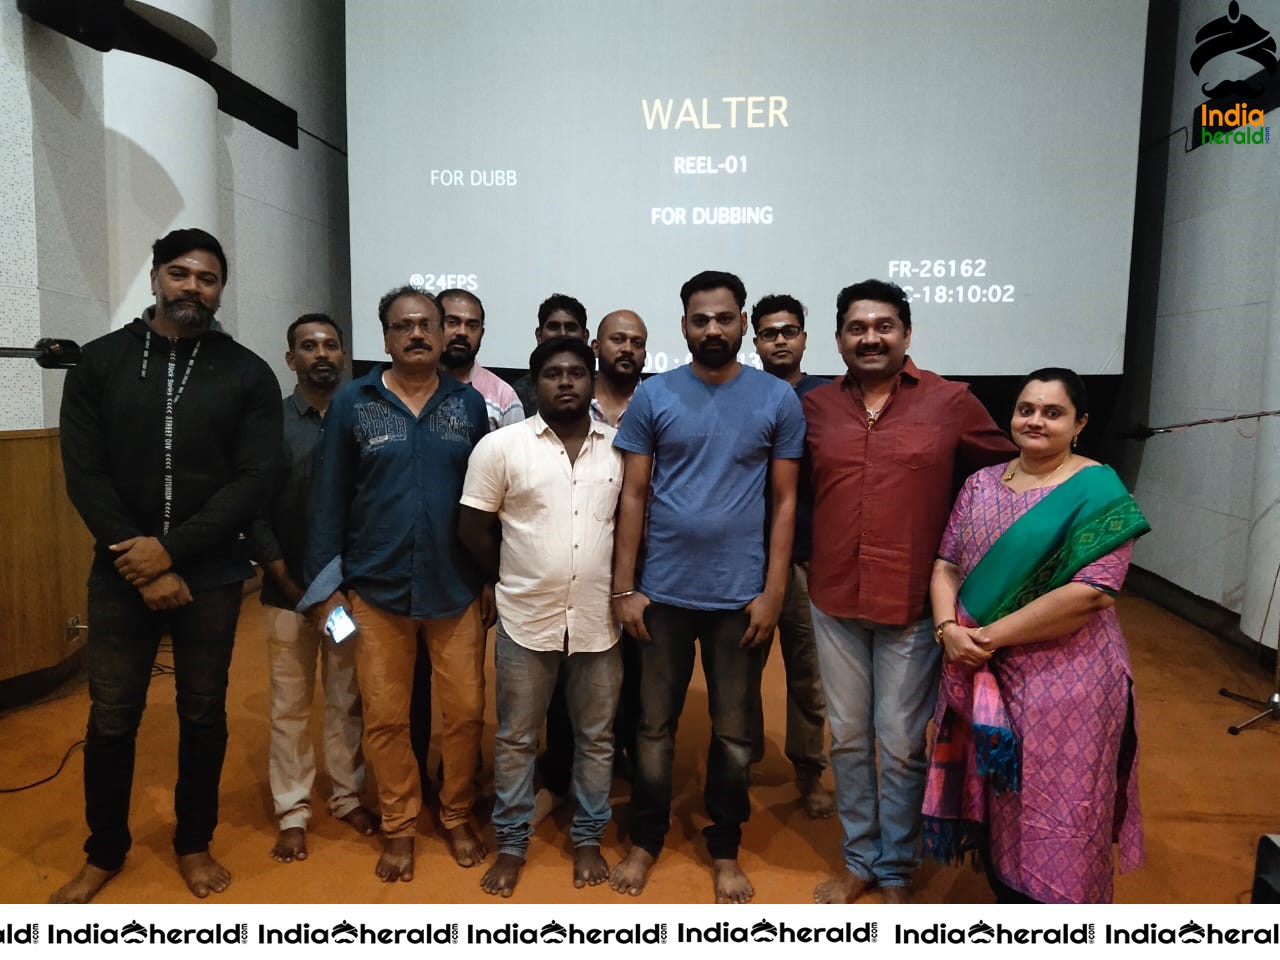 Walter Tamil Movie Dubbing Begins